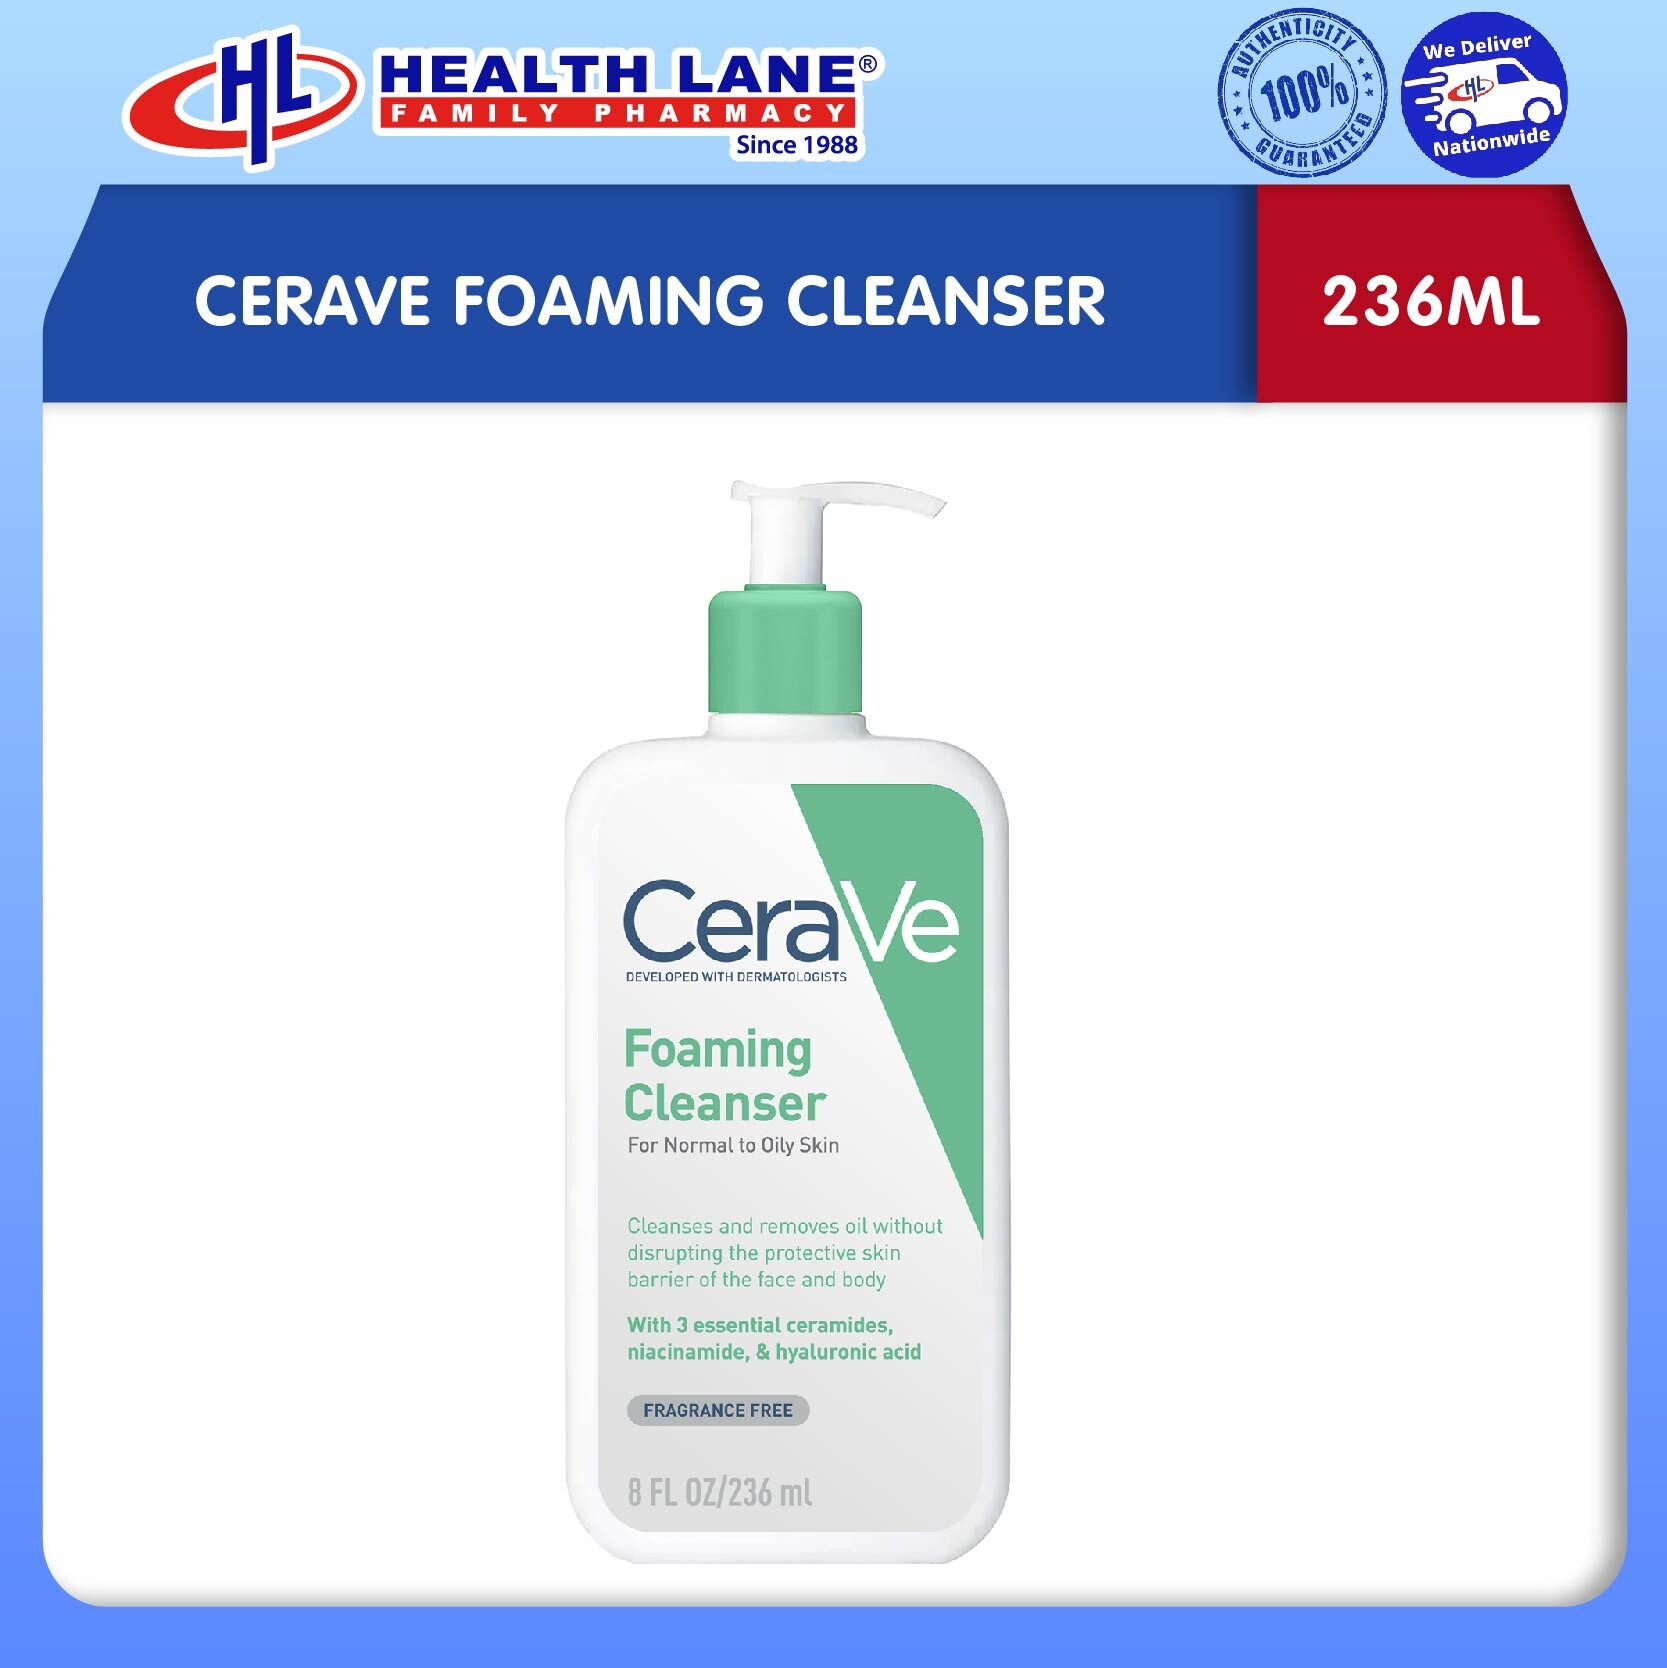 CERAVE FOAMING CLEANSER (236ML)